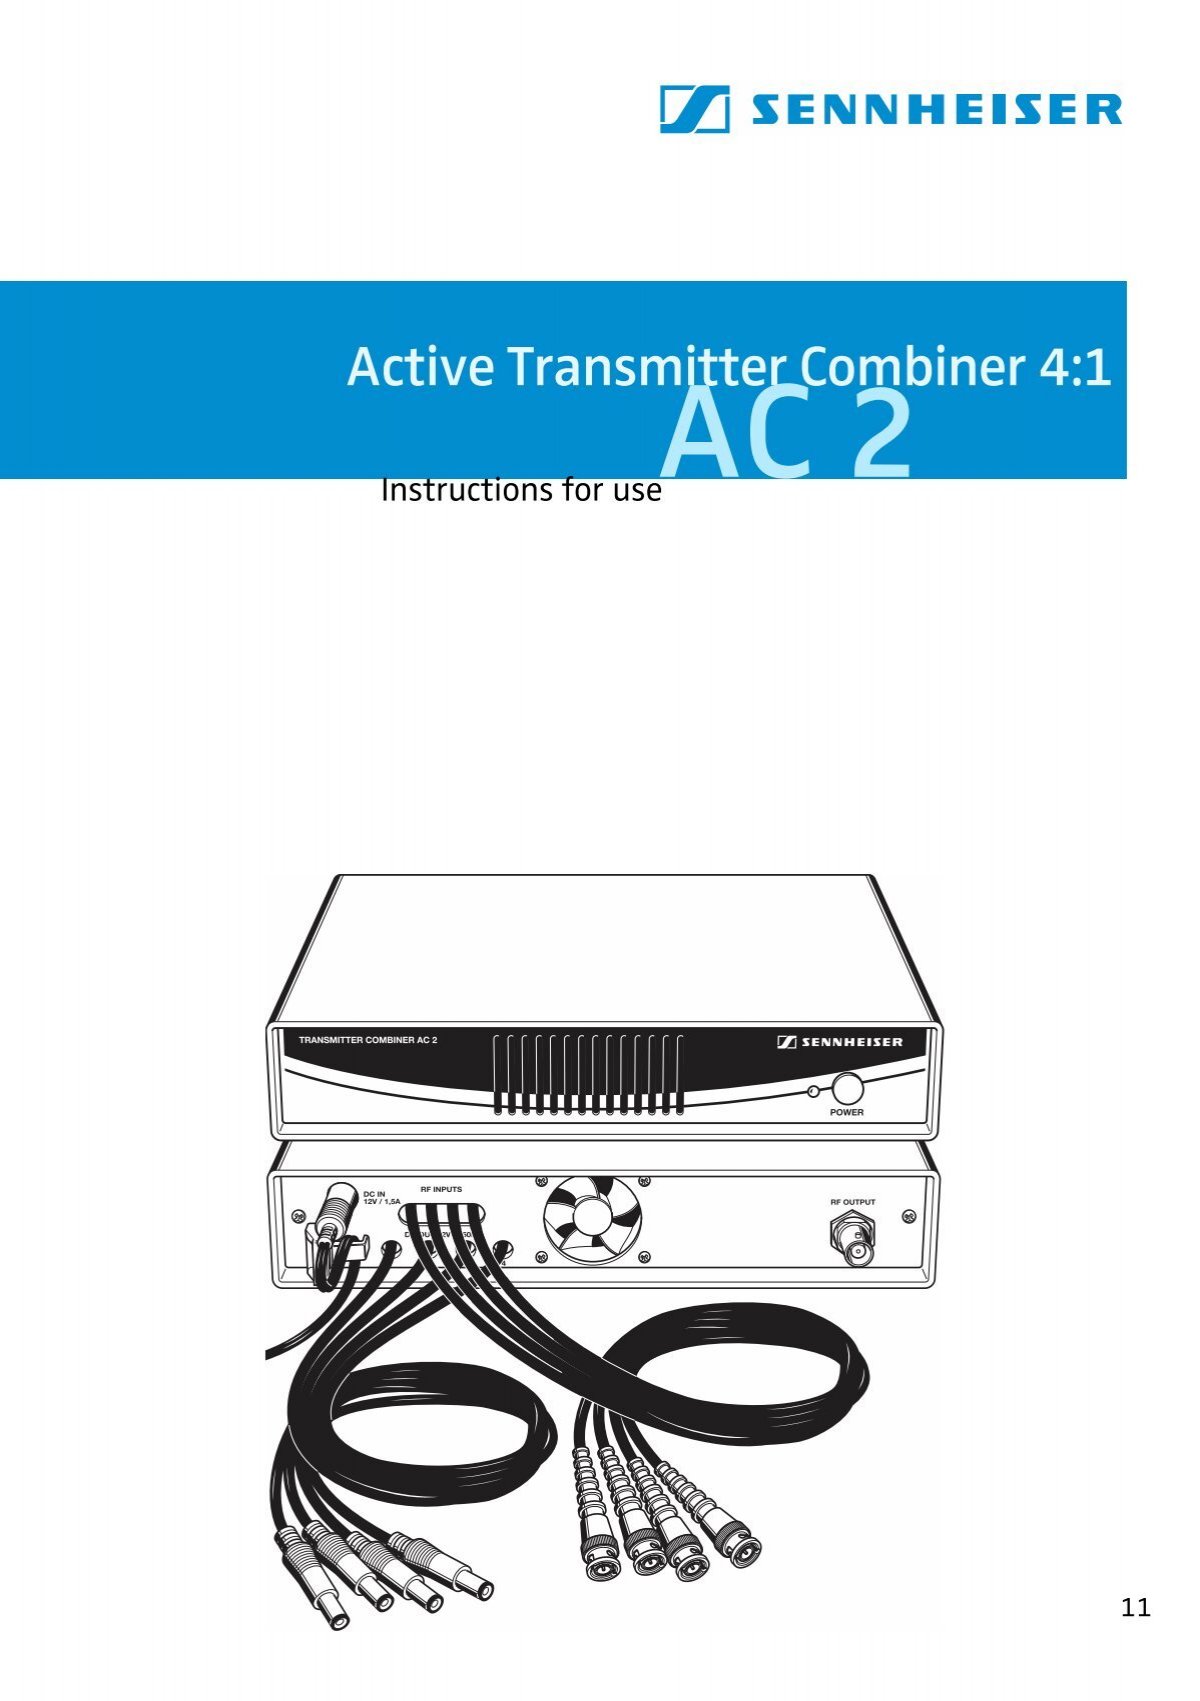 Sennheiser Ac2 Combiner Manual Pdf